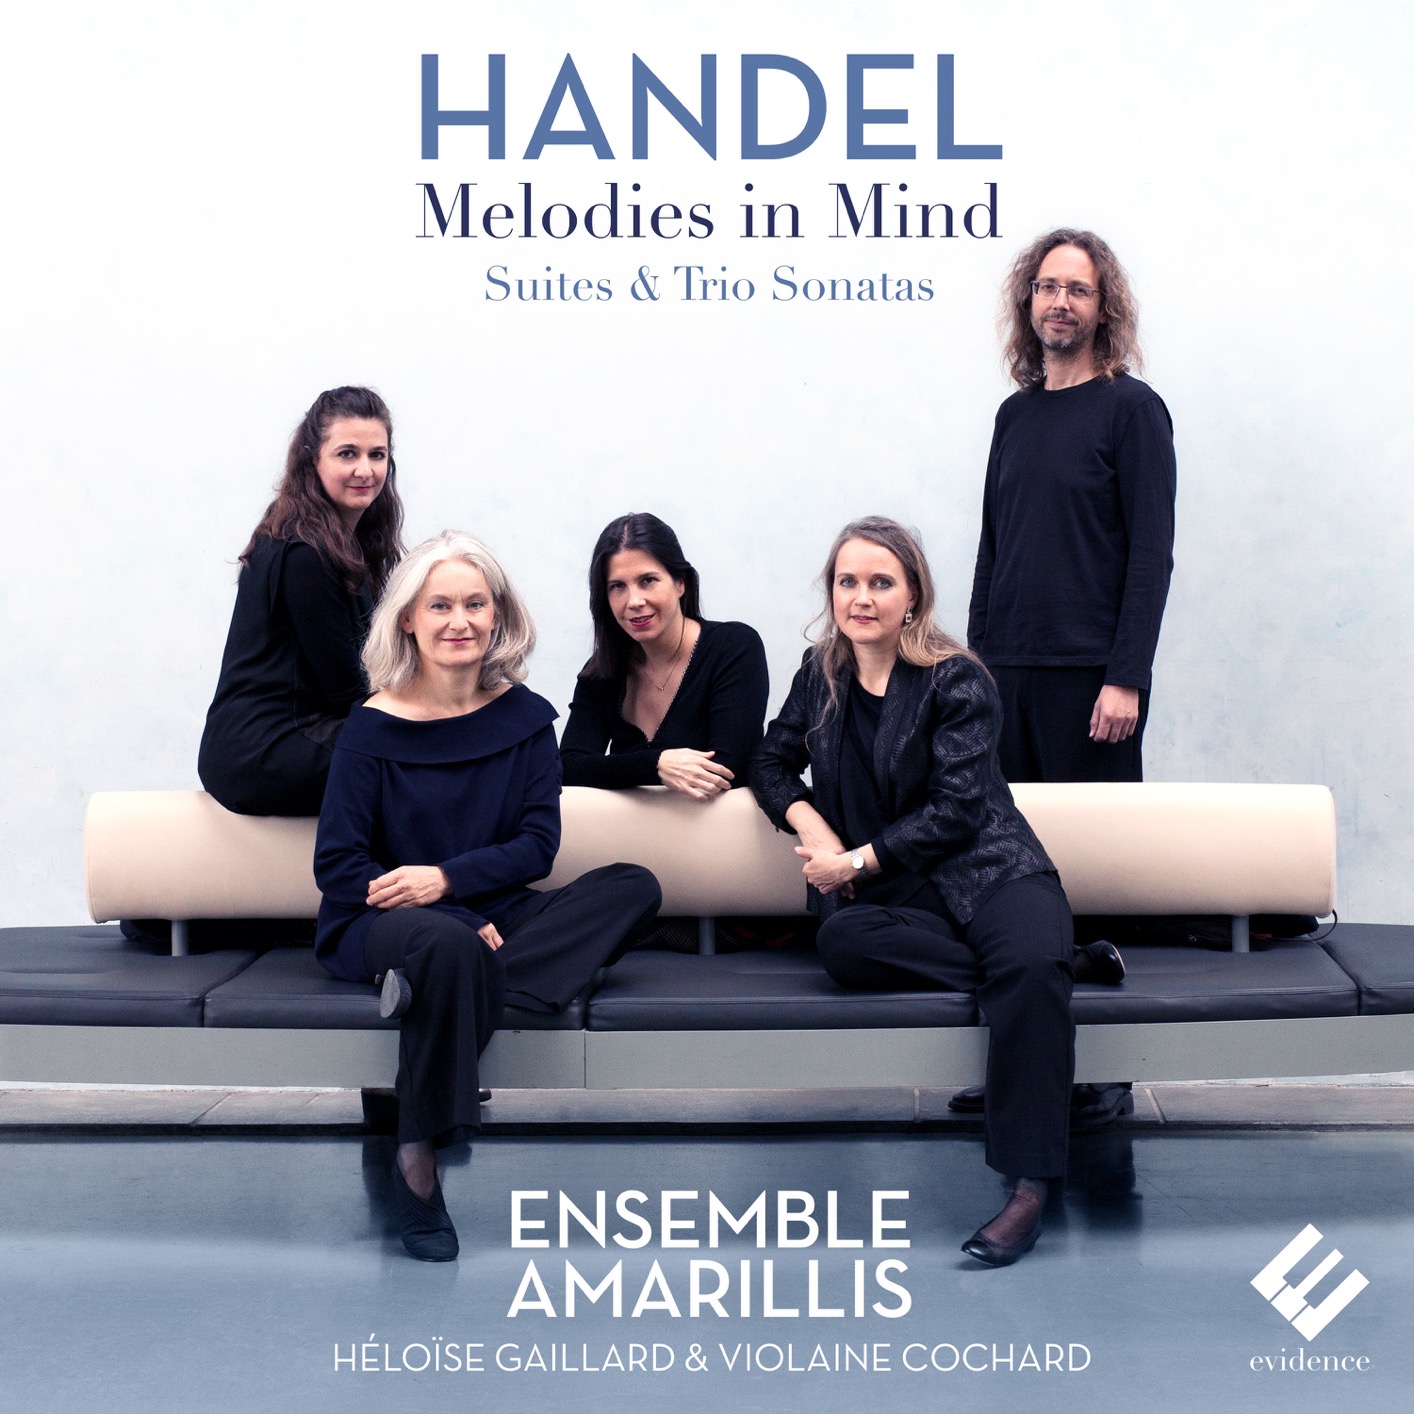 Ensemble Amarillis - Handel: Melodies in Mind (Suites & Trio Sonatas) (2018) [FLAC 24bit/96kHz]